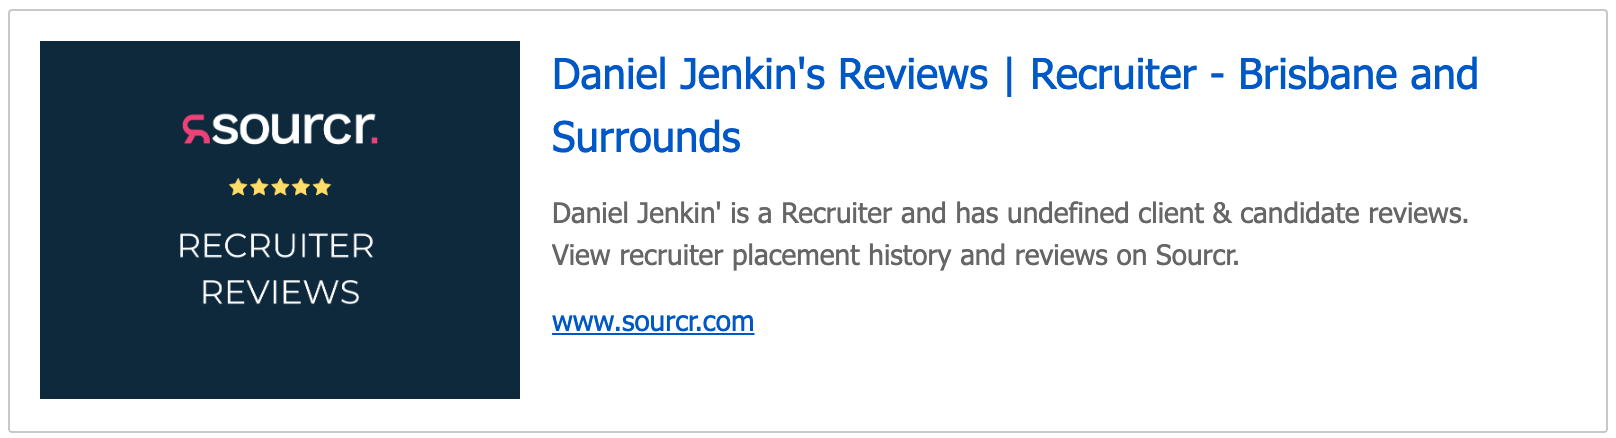 Daniel Jenkin's Reviews | Recruiter - Brisbane and Surrounds